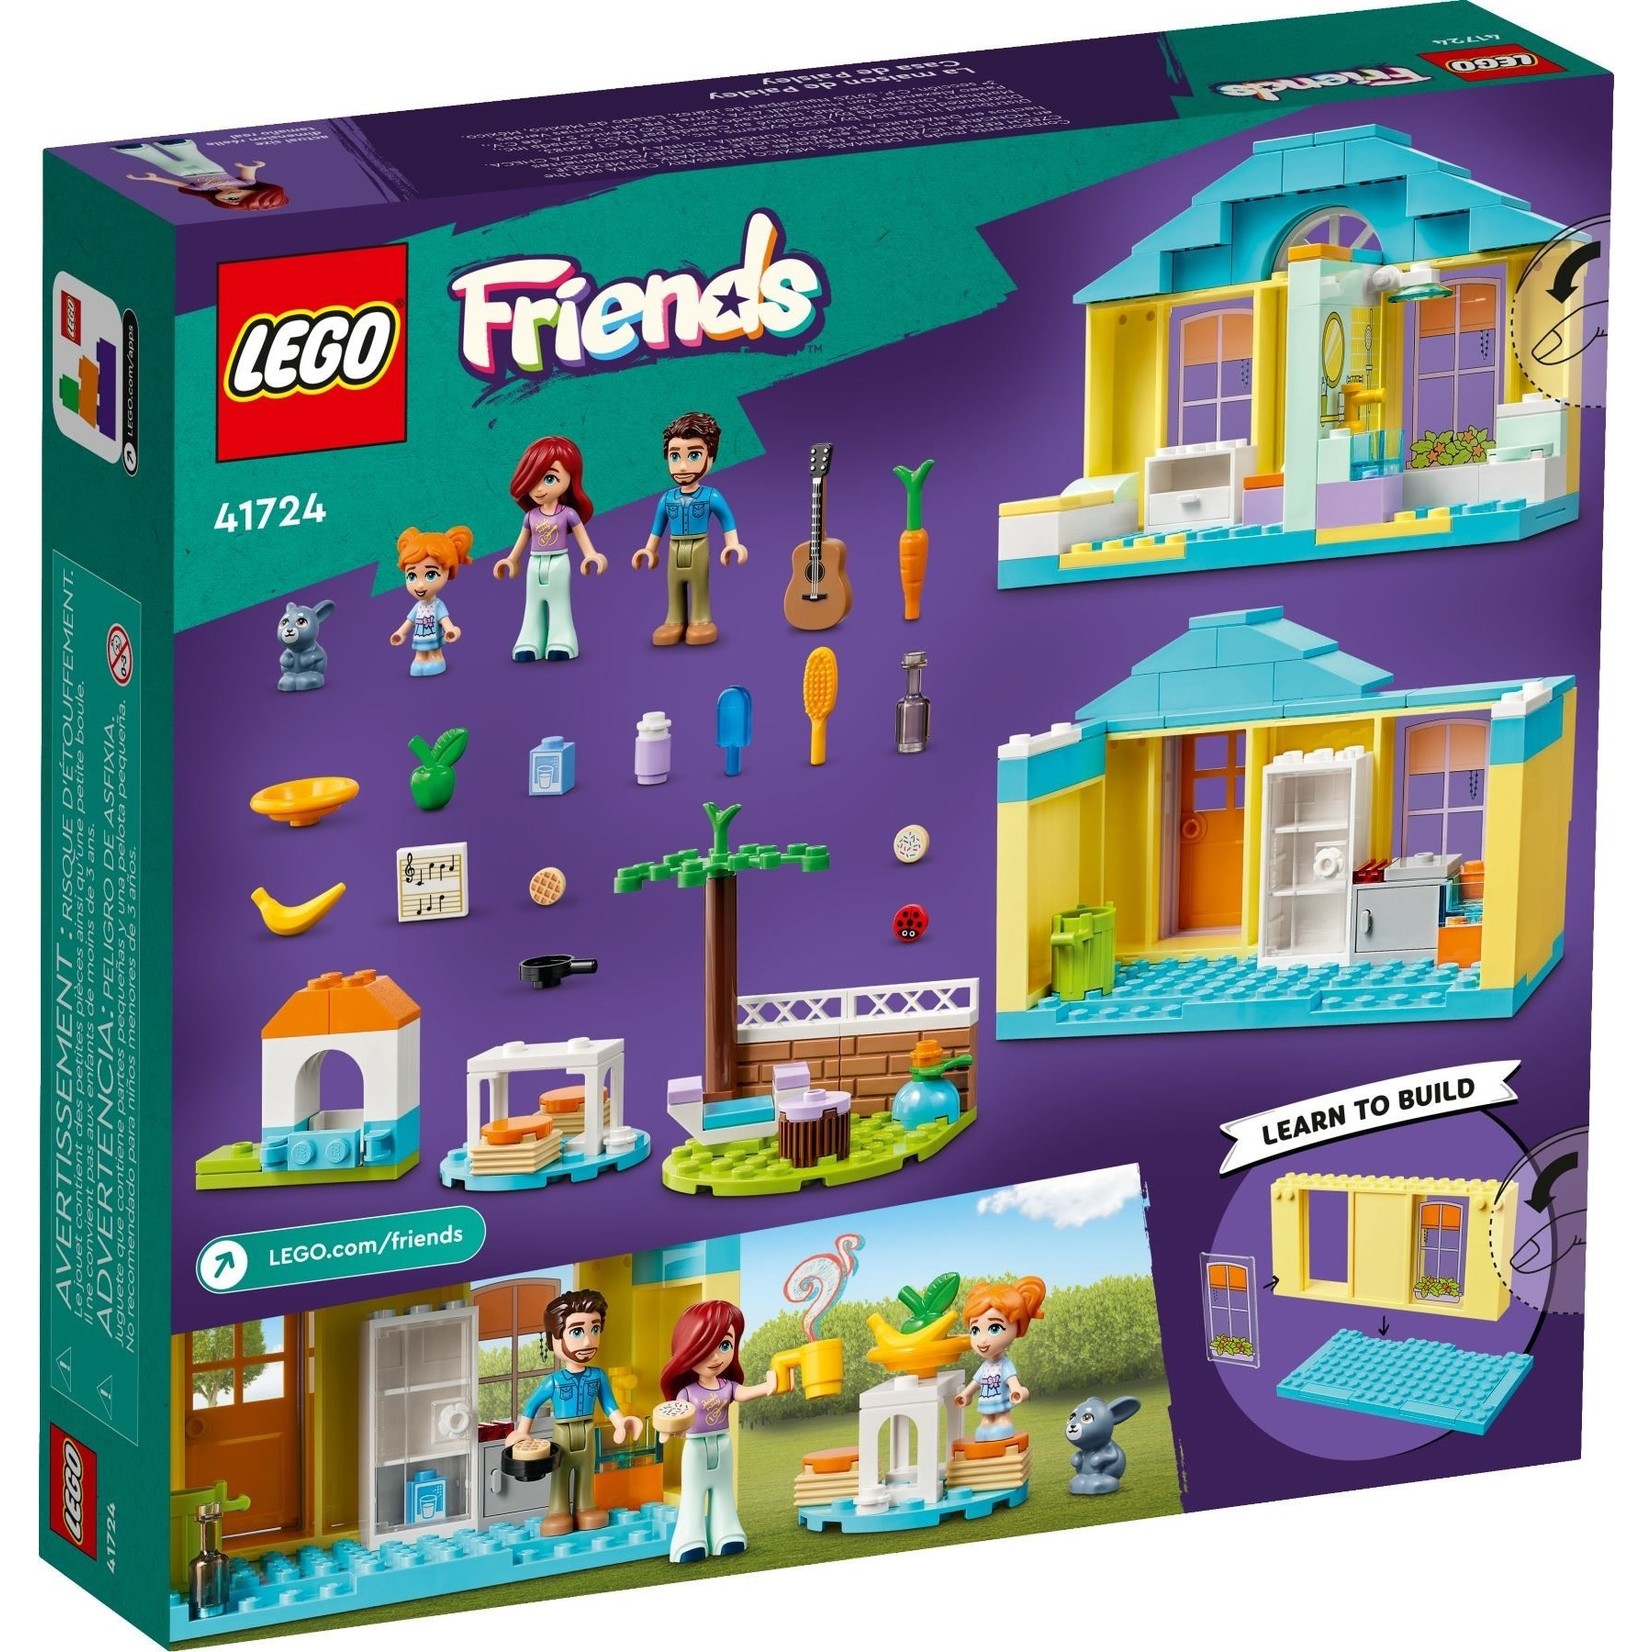 LEGO Paisley's huis - 41724